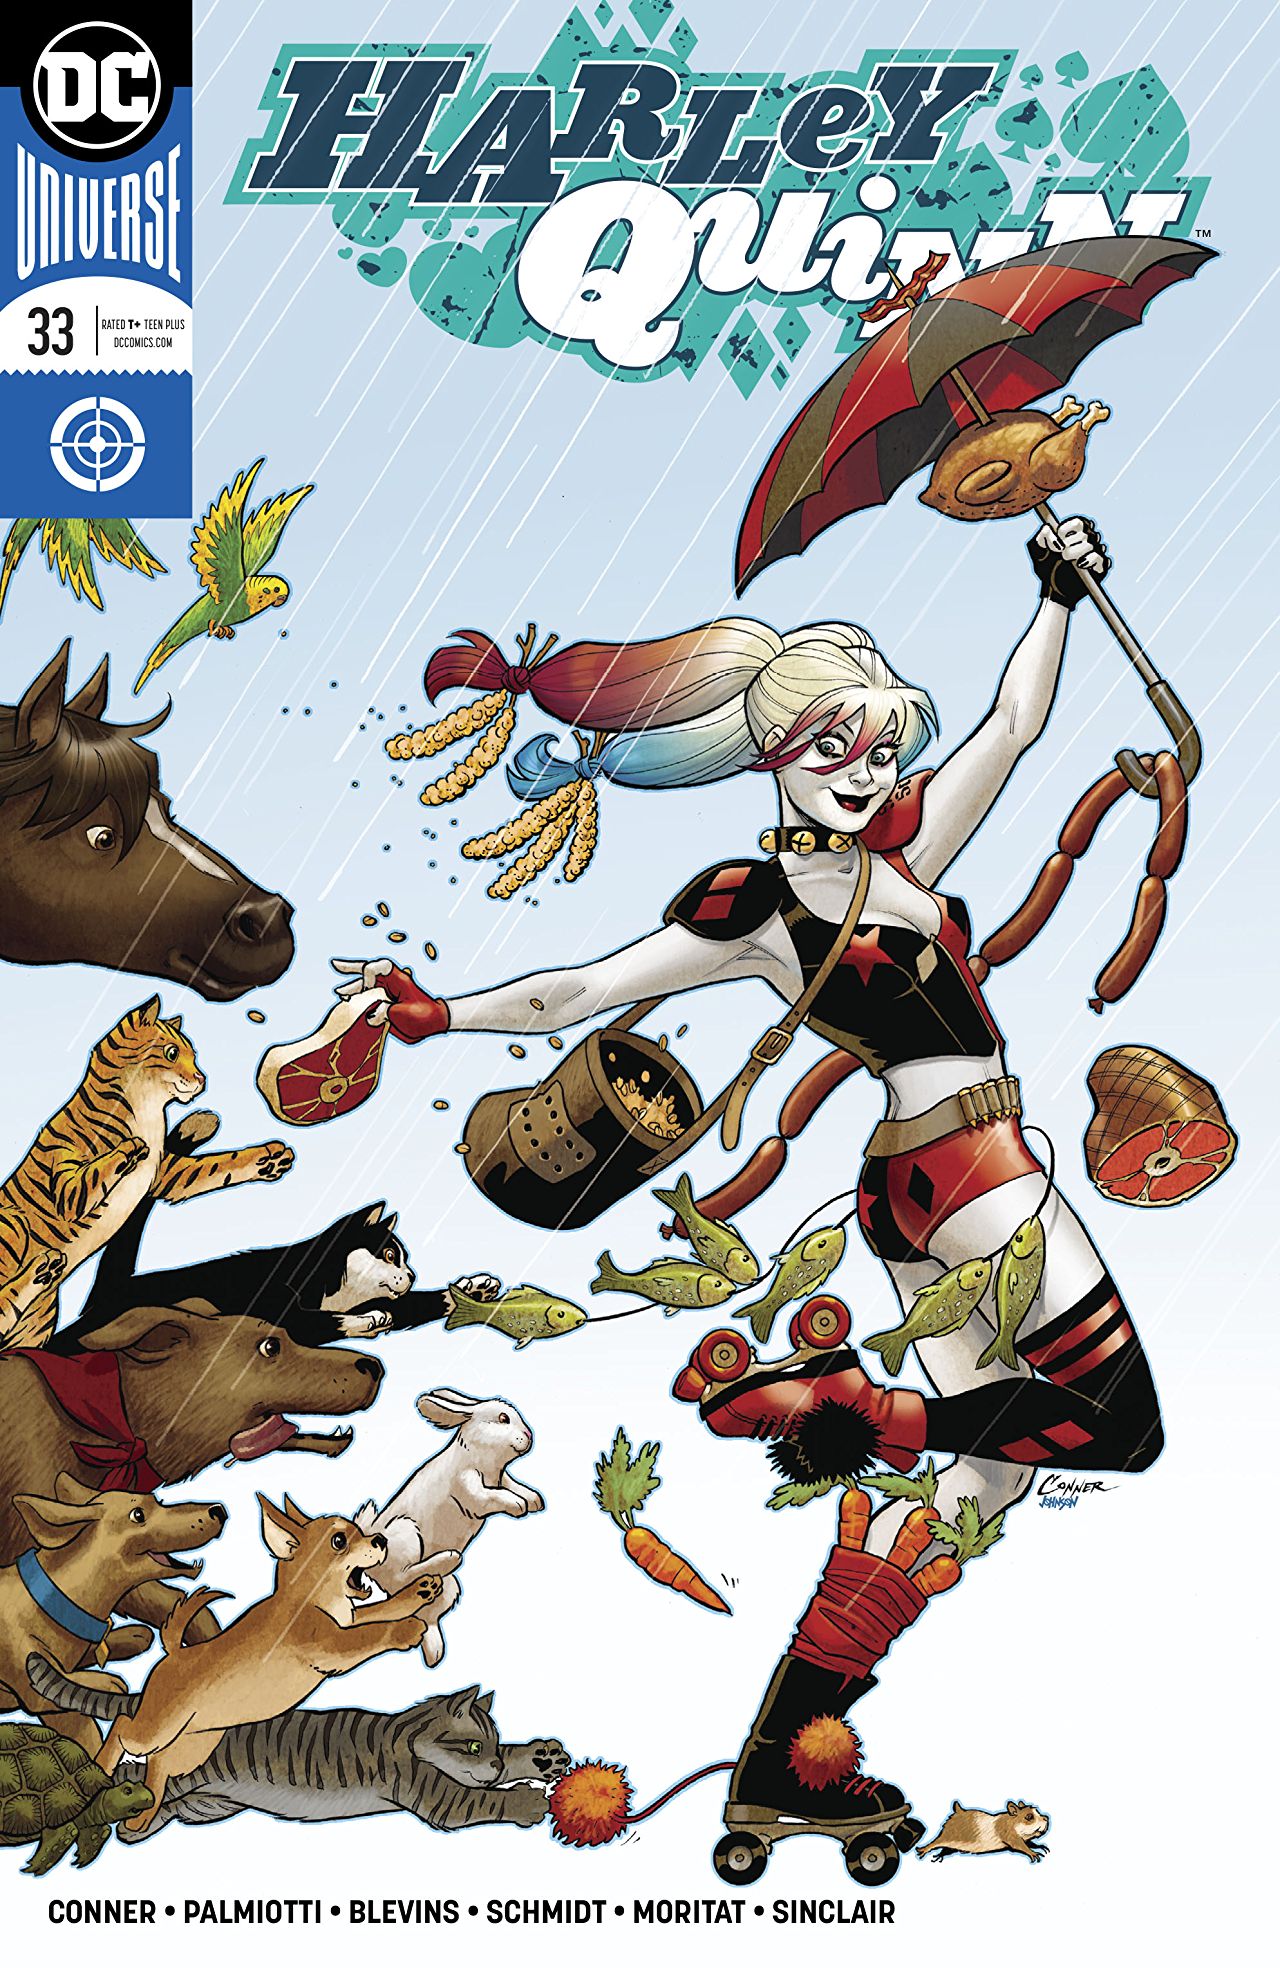 Harley Quinn #33 Review